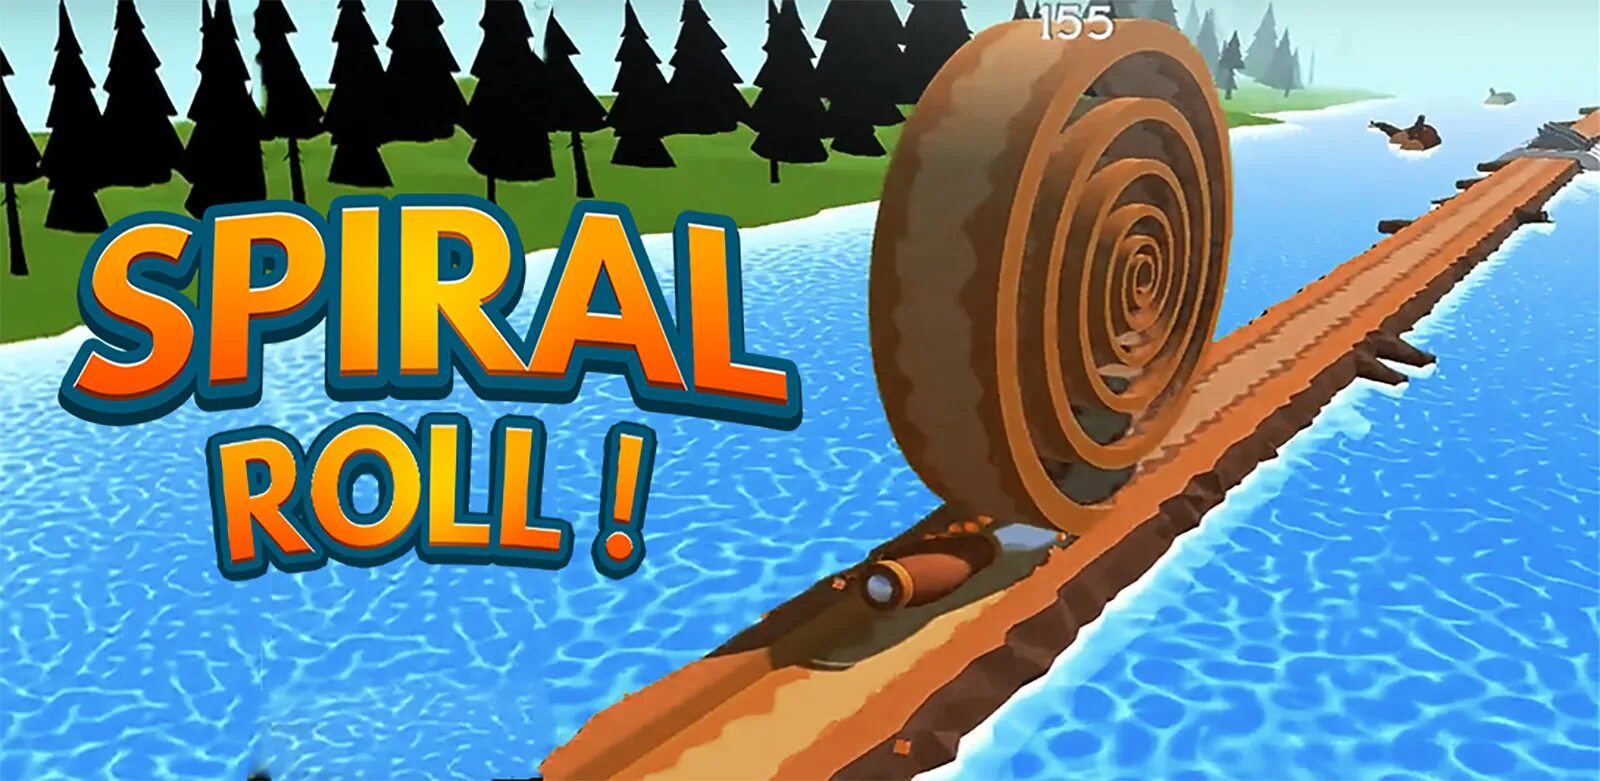 Roll download. Spiral Roll. Spiral Roll игра. Spiral Roll играть. Игра похожая на спирал ролл.